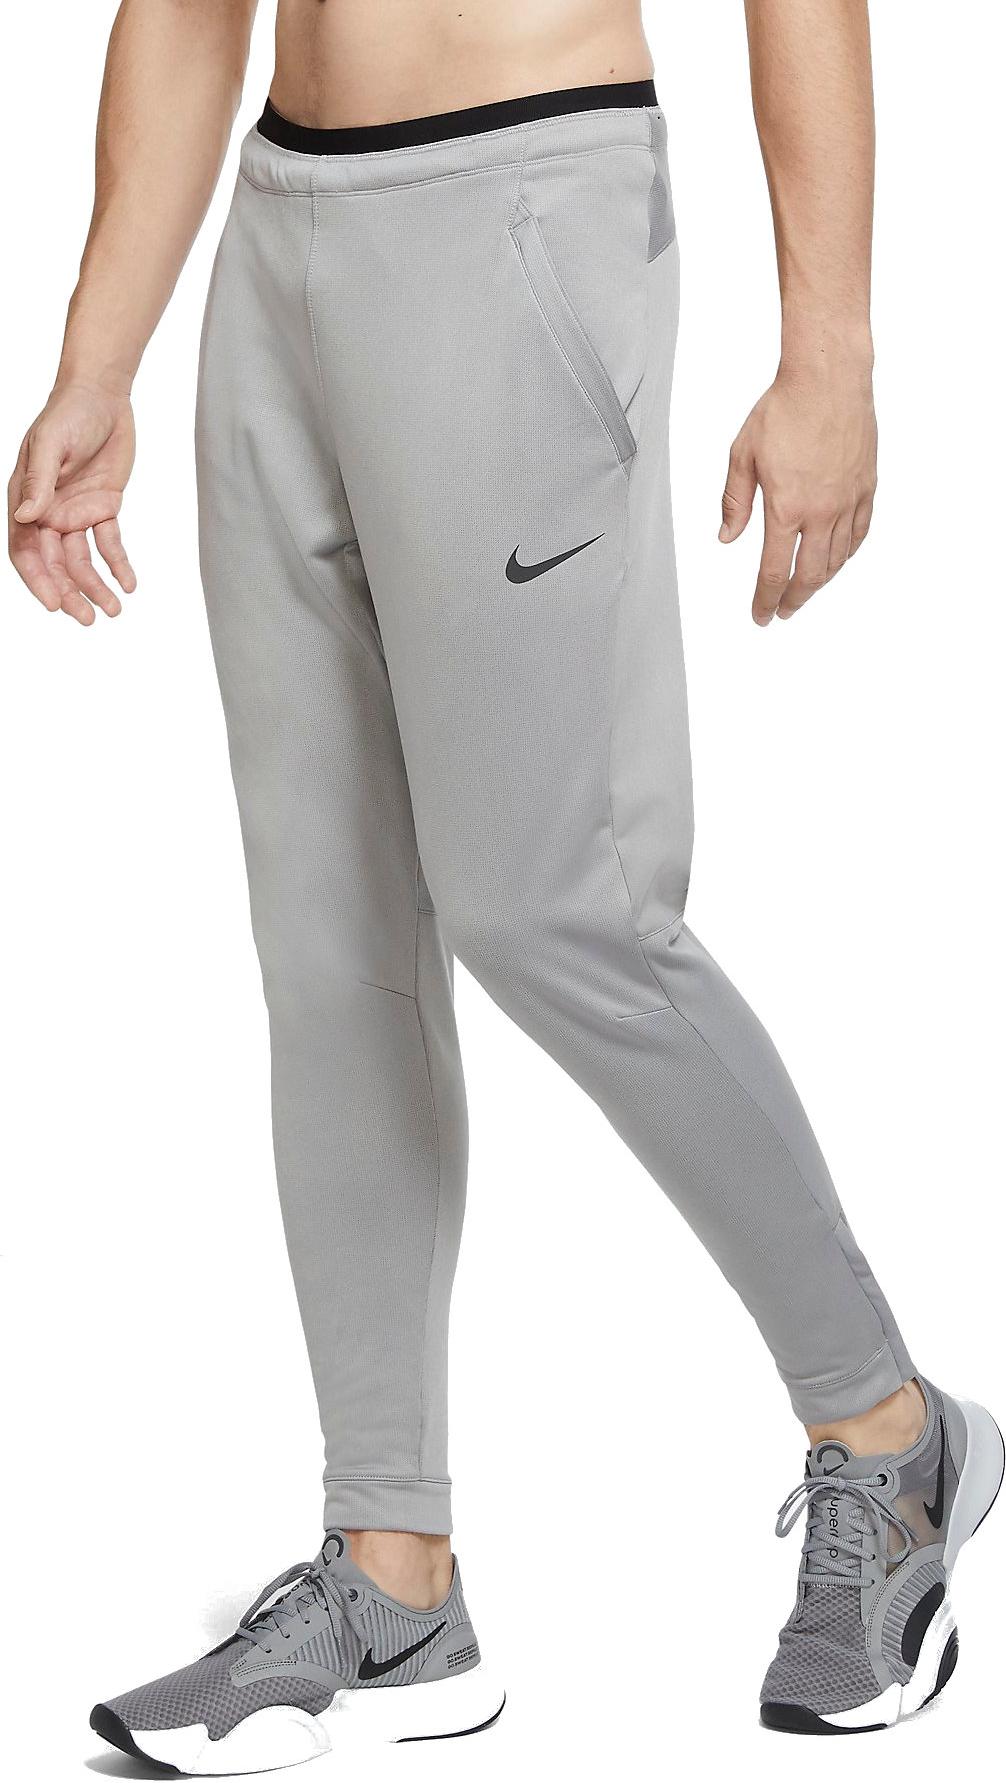 Hose Nike Pro Men s Fleece Pants